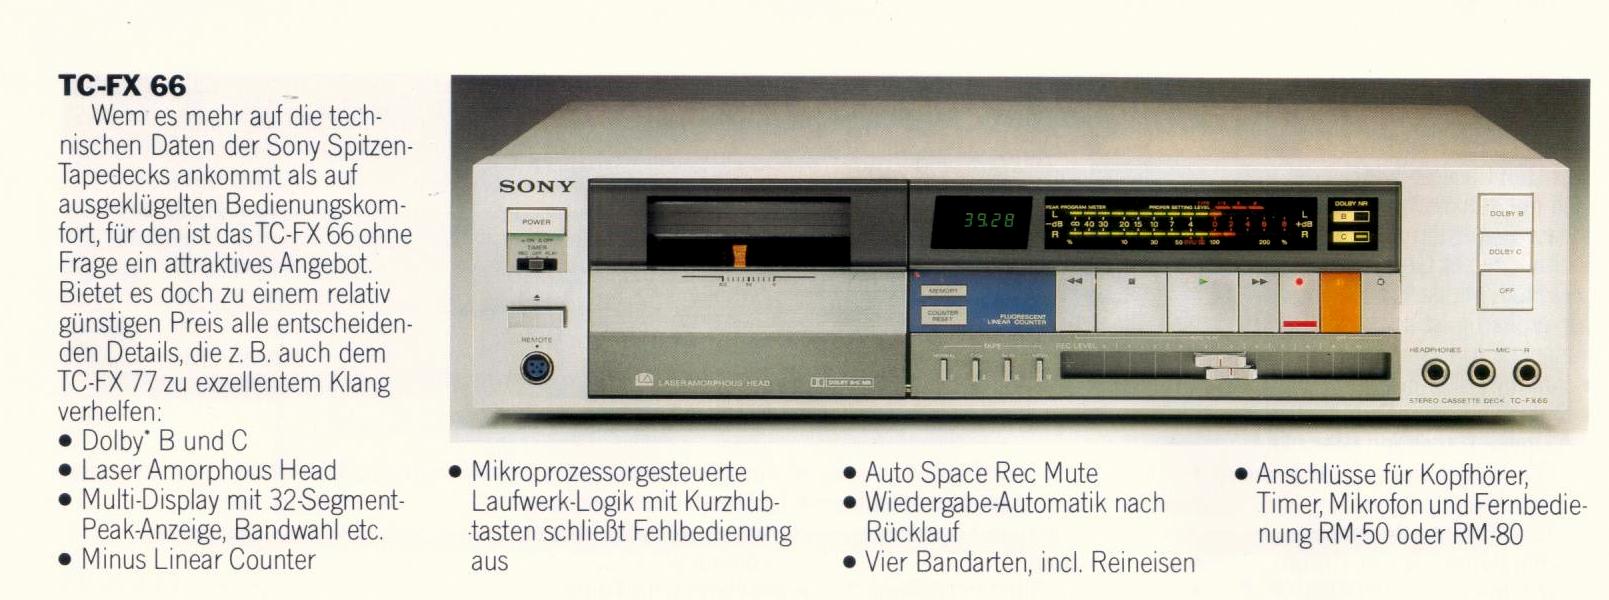 Sony TC-FX 66-Prospekt-1982.jpg